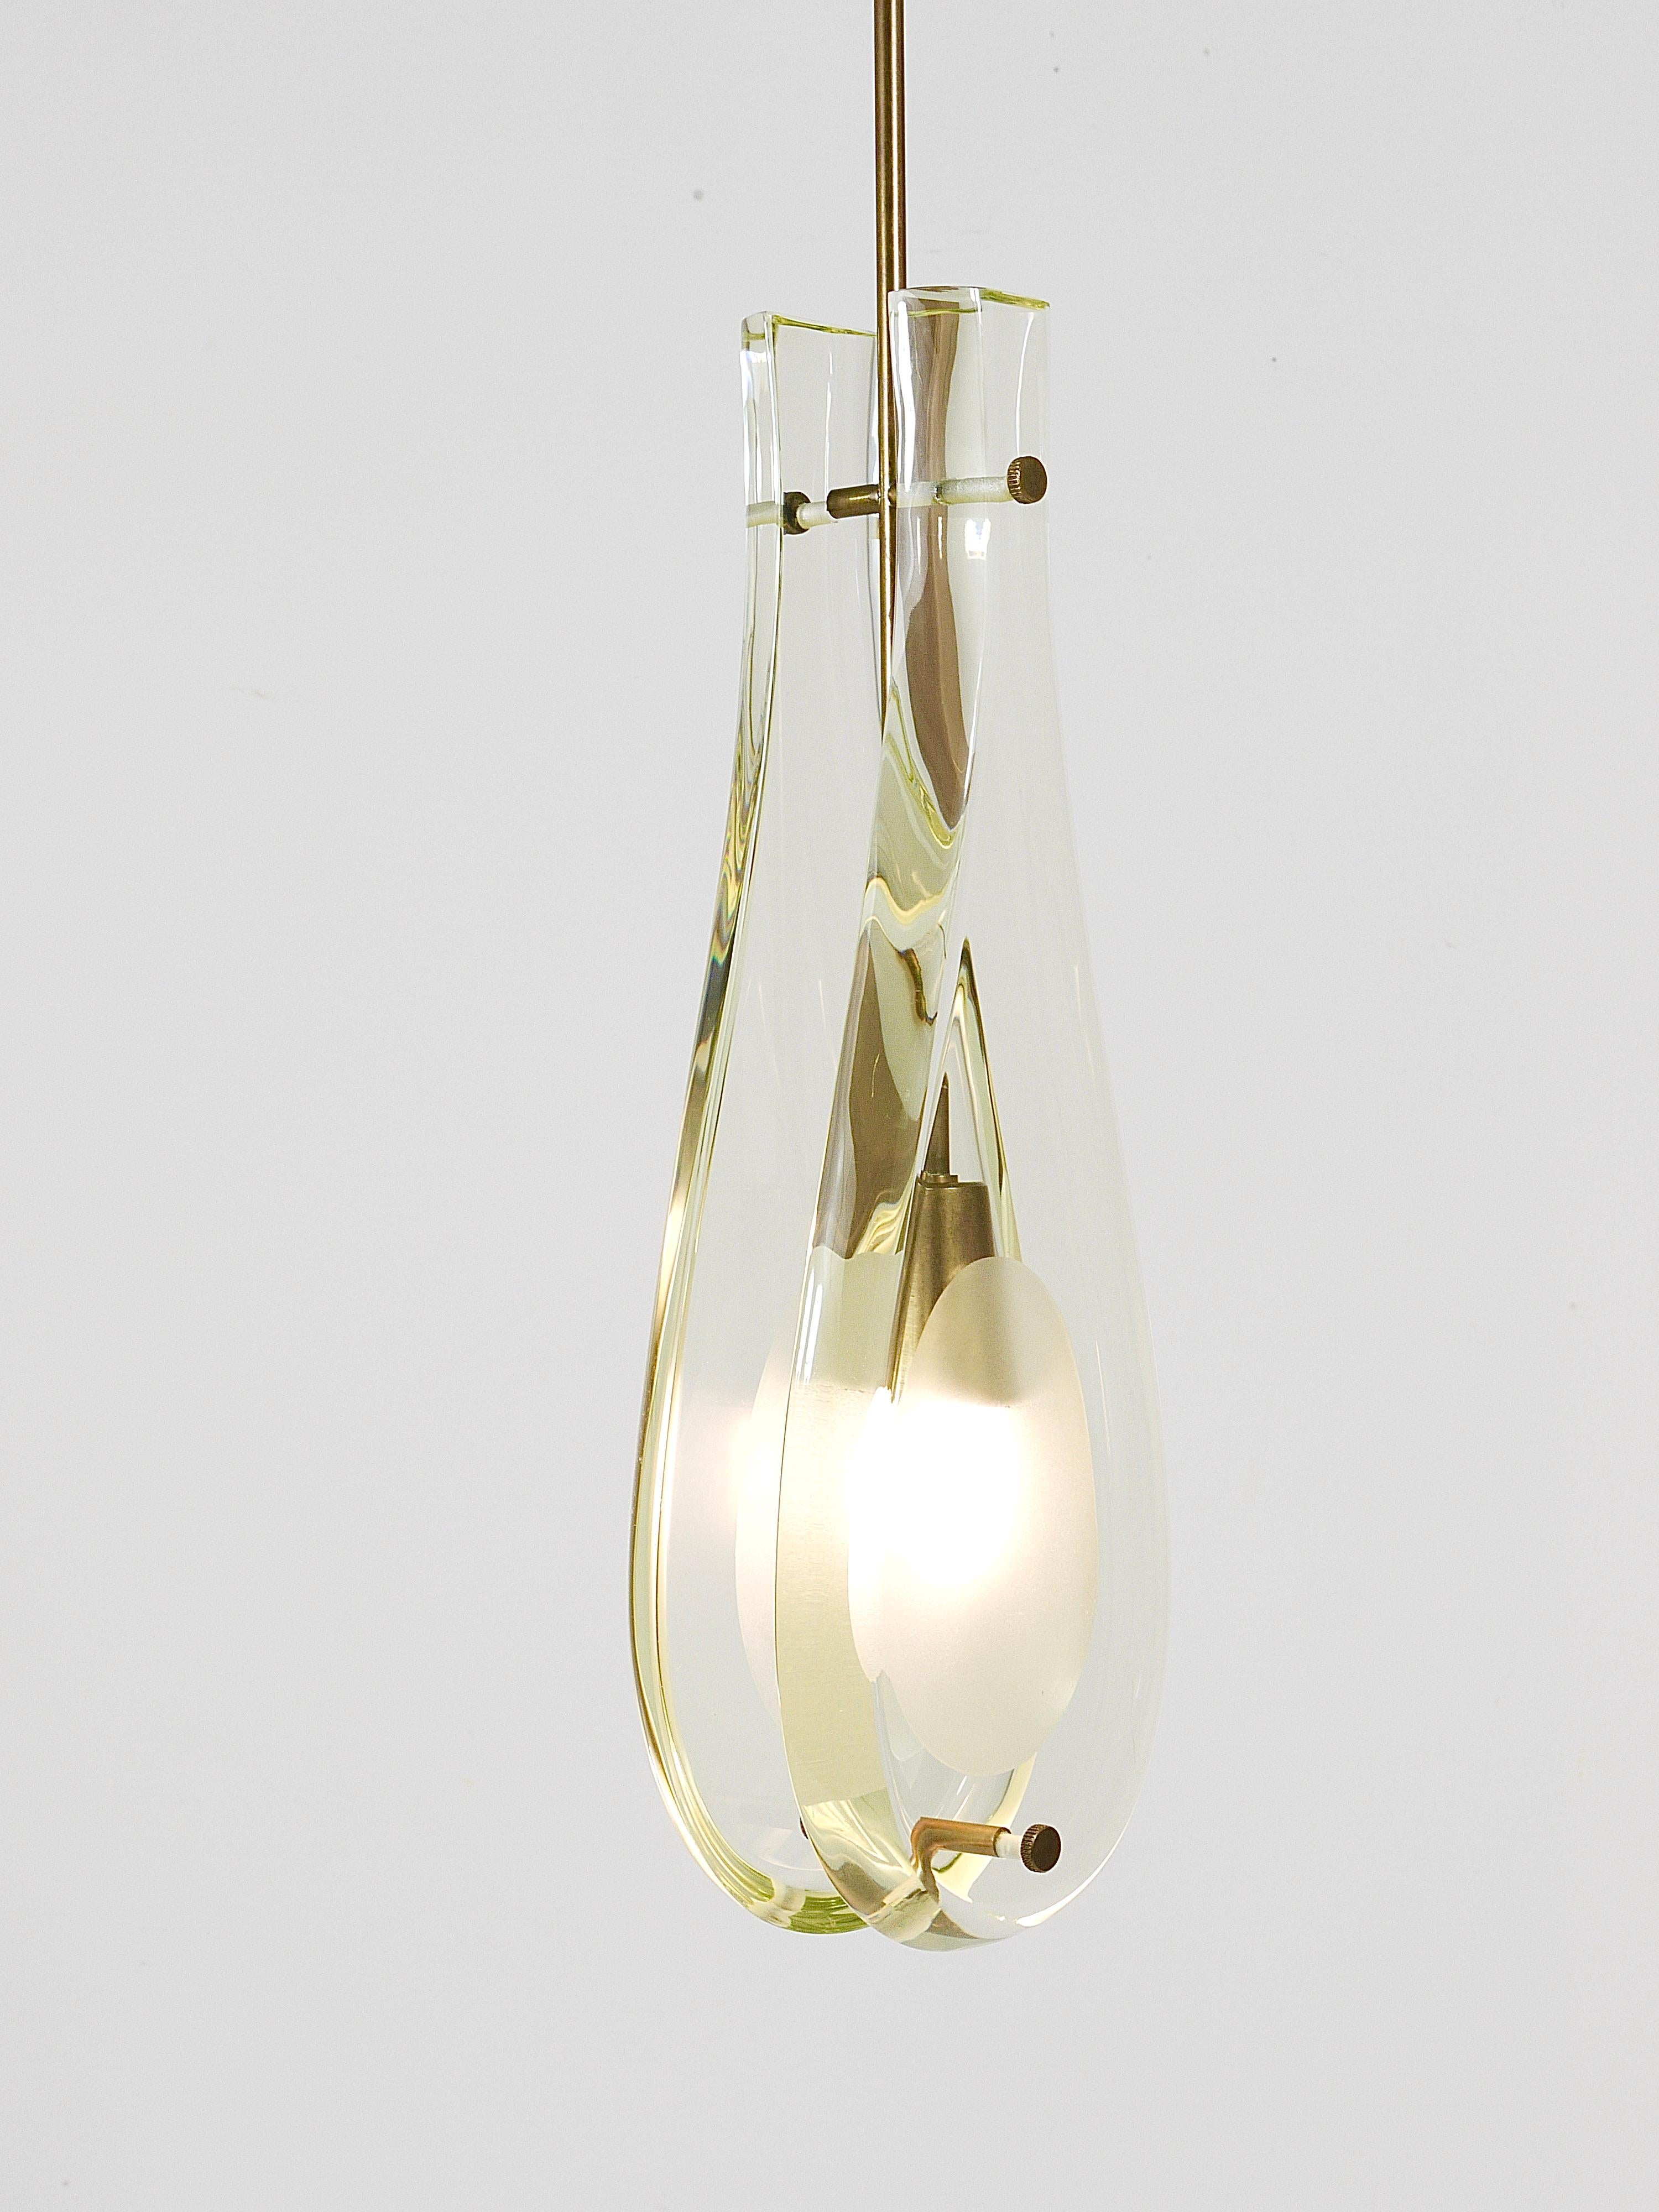 Max Ingrad For Fontana Arte Drop Pendant Lamp, Model 2259, Italy, 1960s For Sale 5